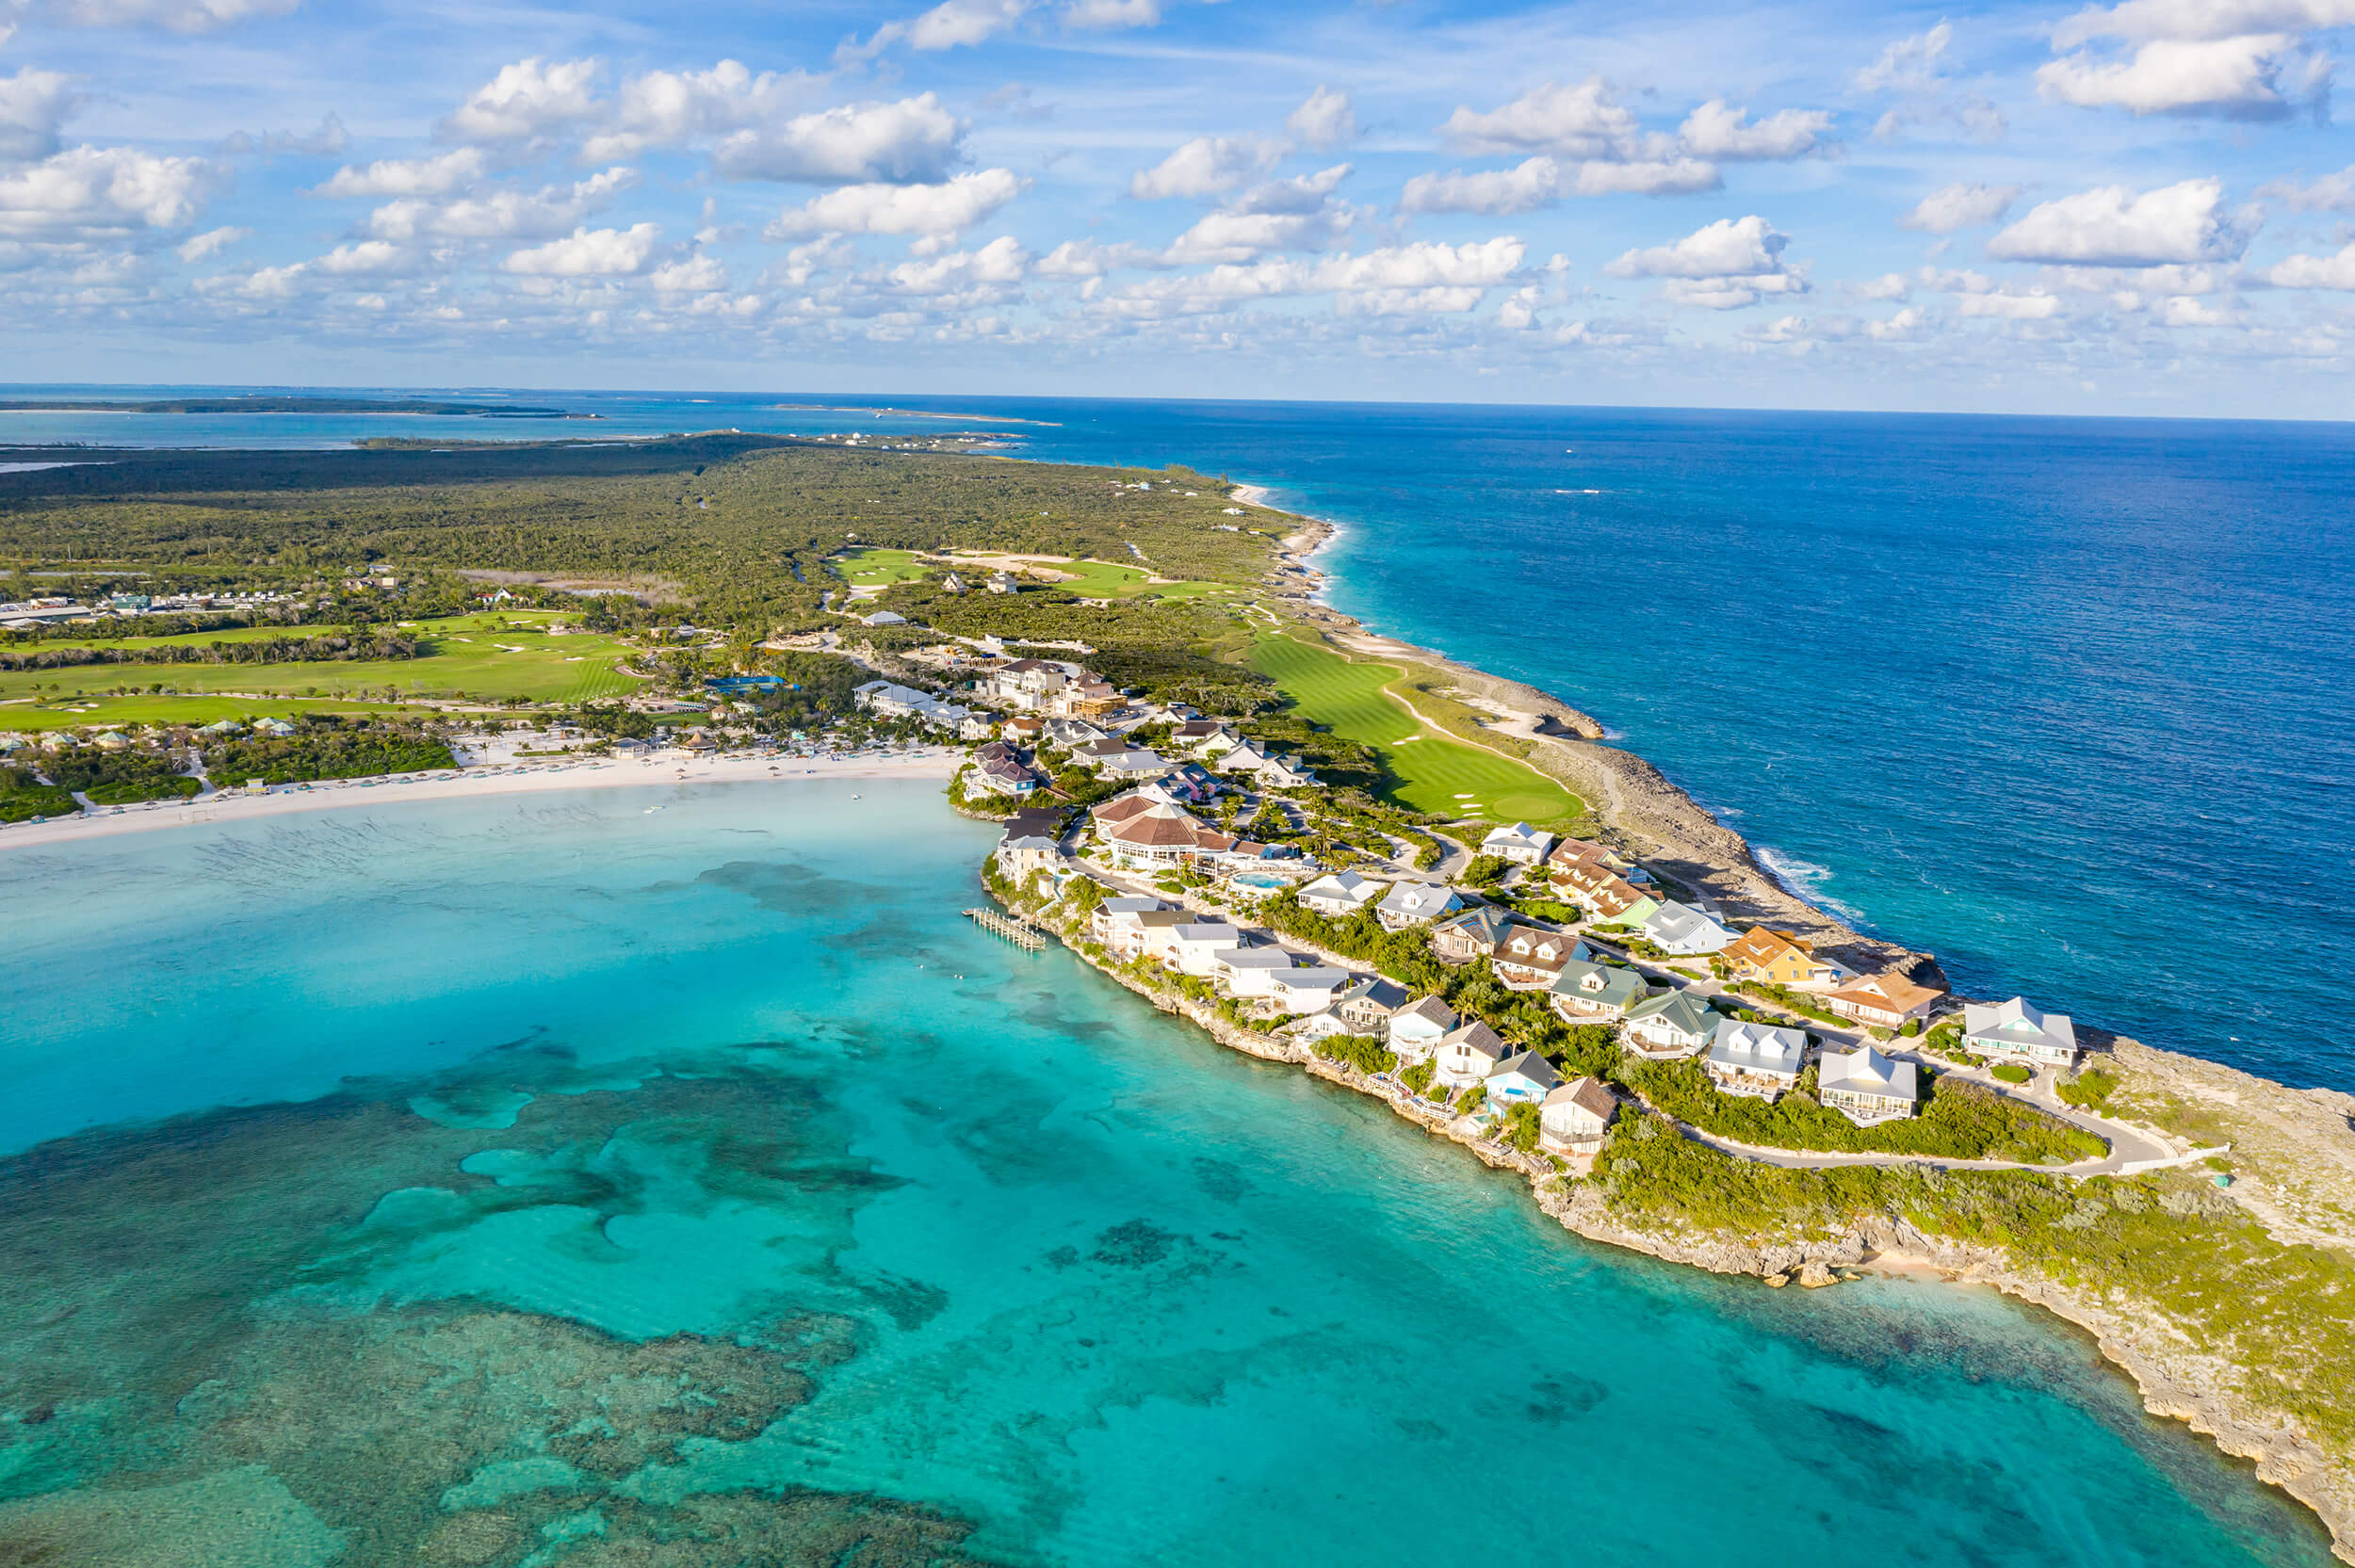 The Abaco Club overlooking the Bahamian sea